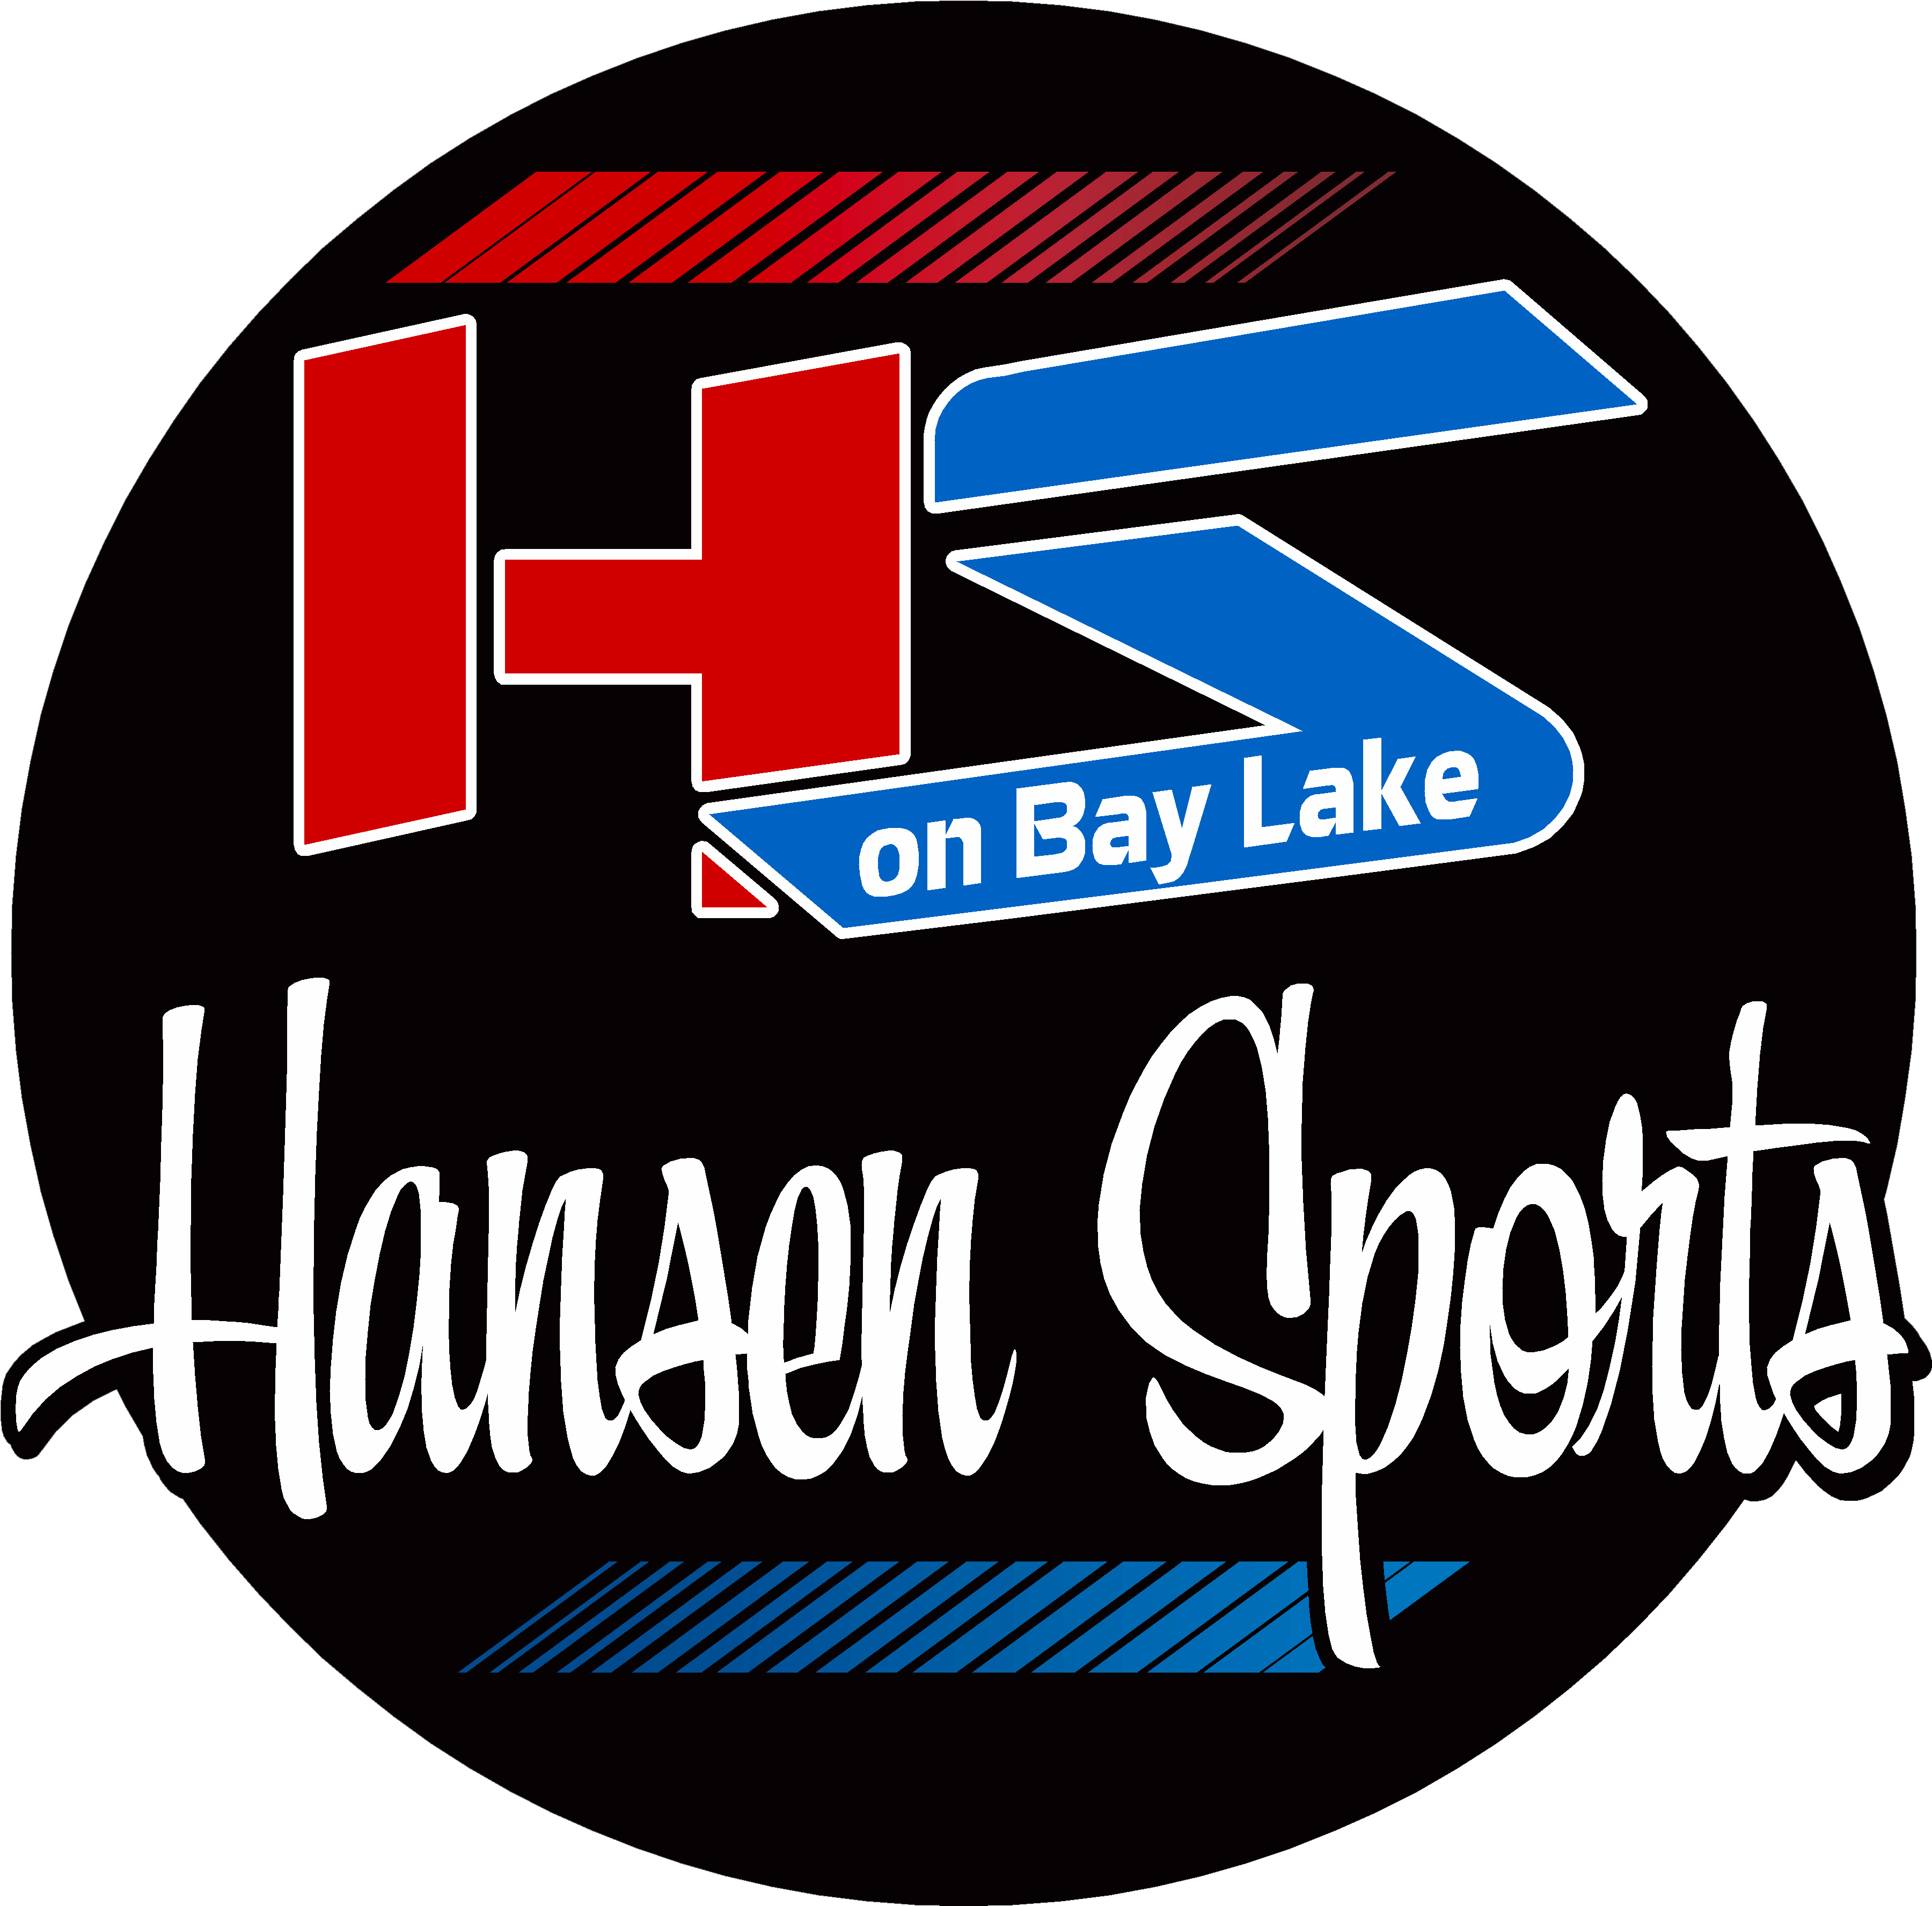 Hansen's Sport on Bay Lake